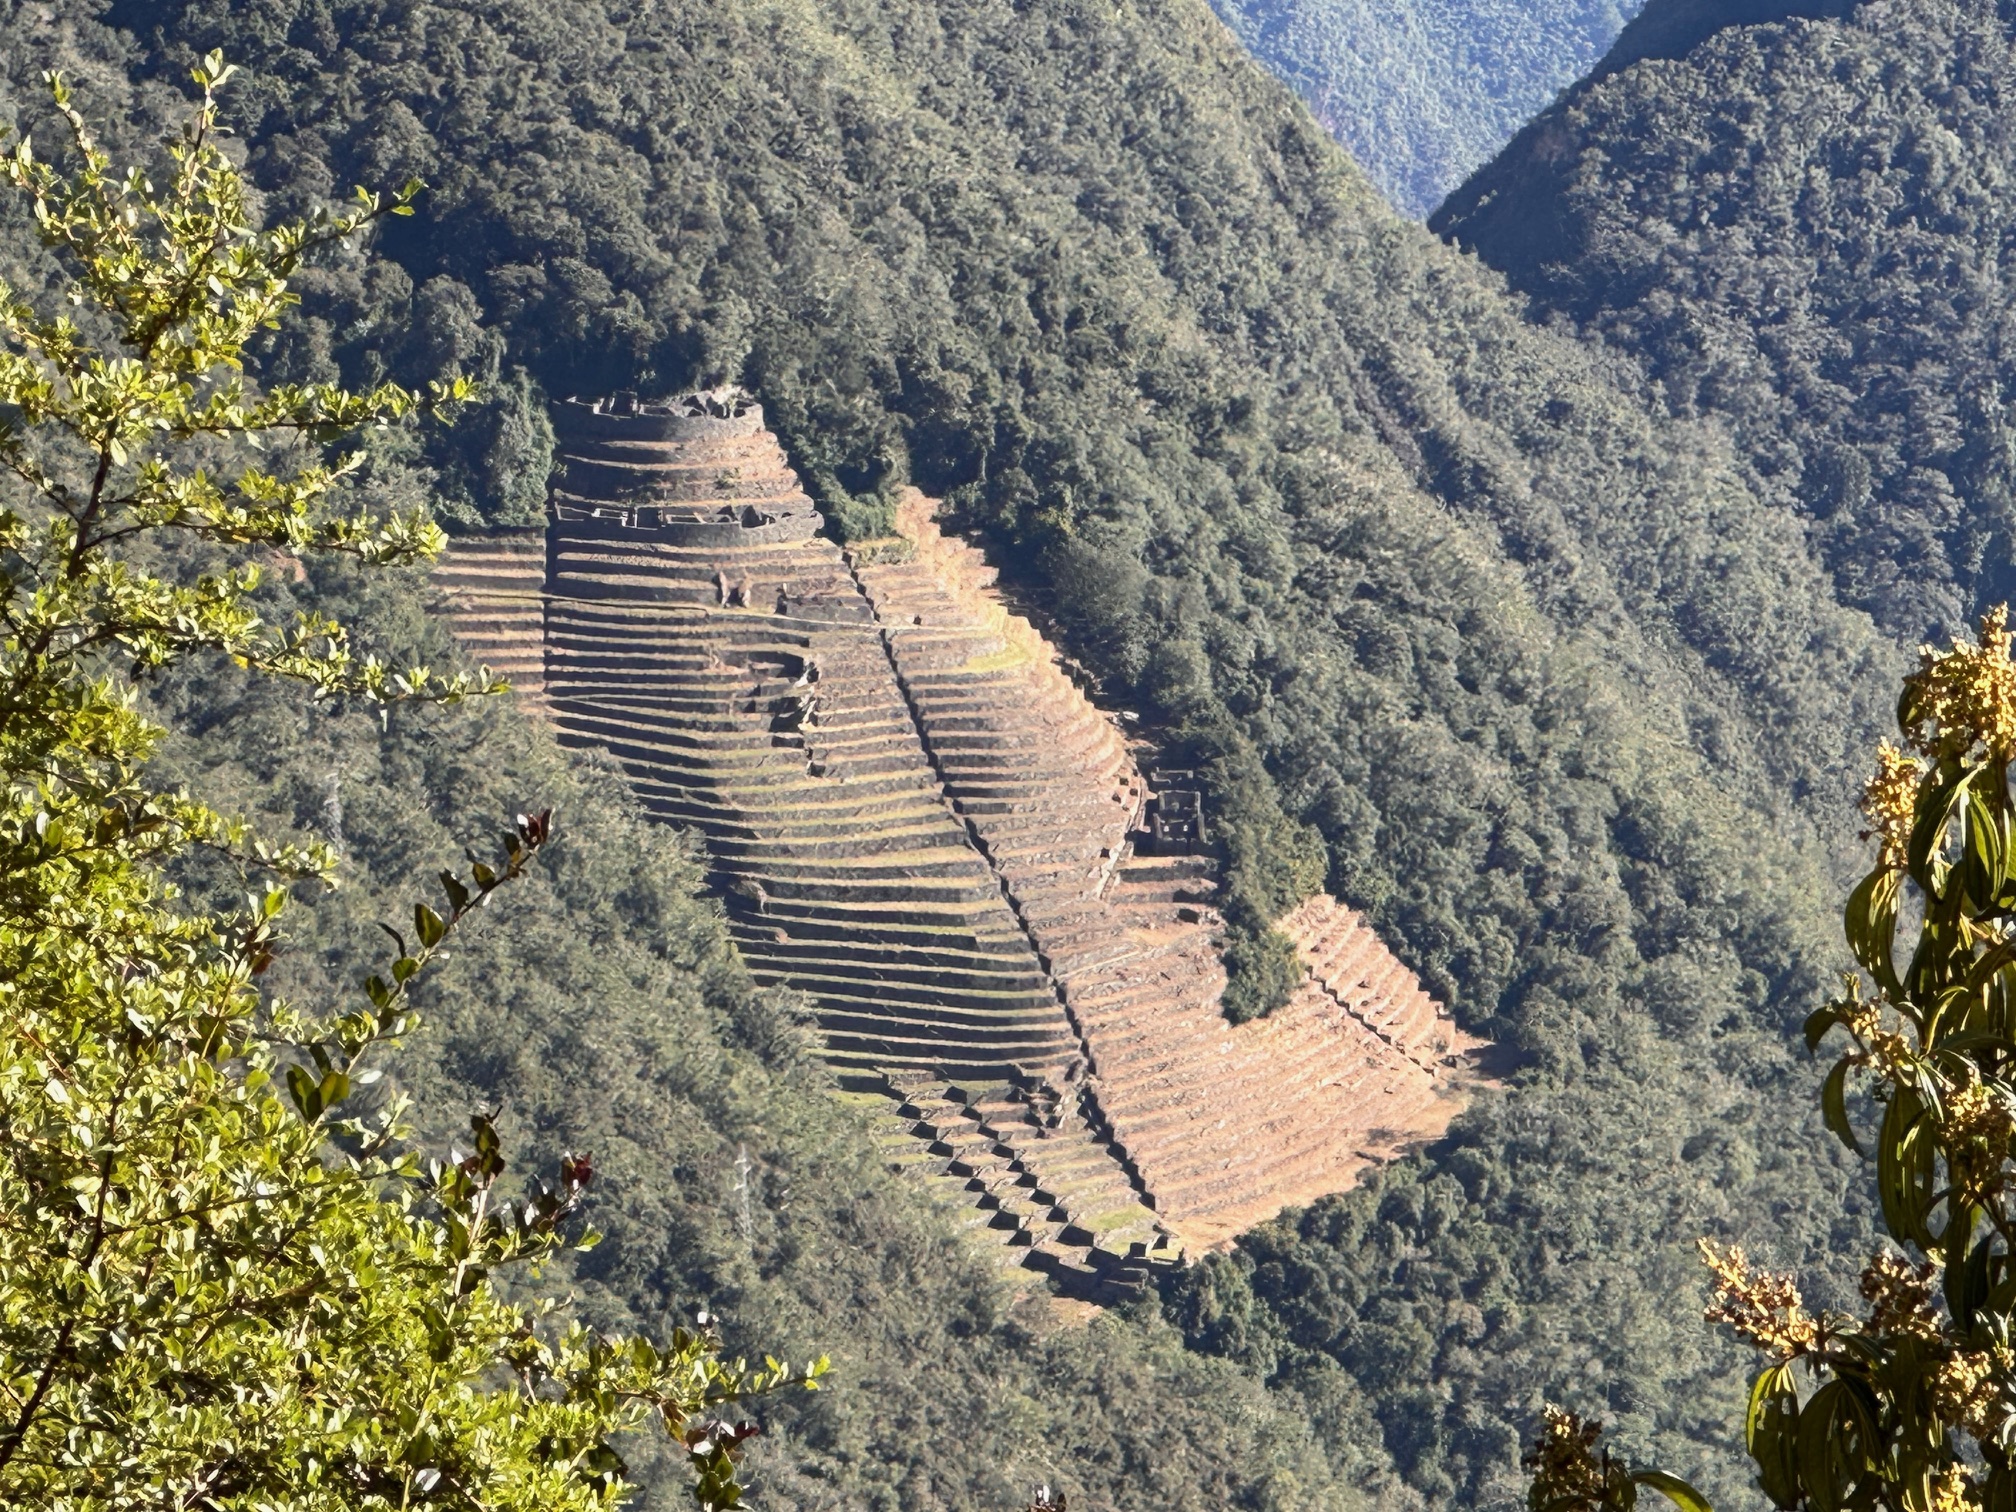 Intipata Inca site on the trail to Machu Picchu